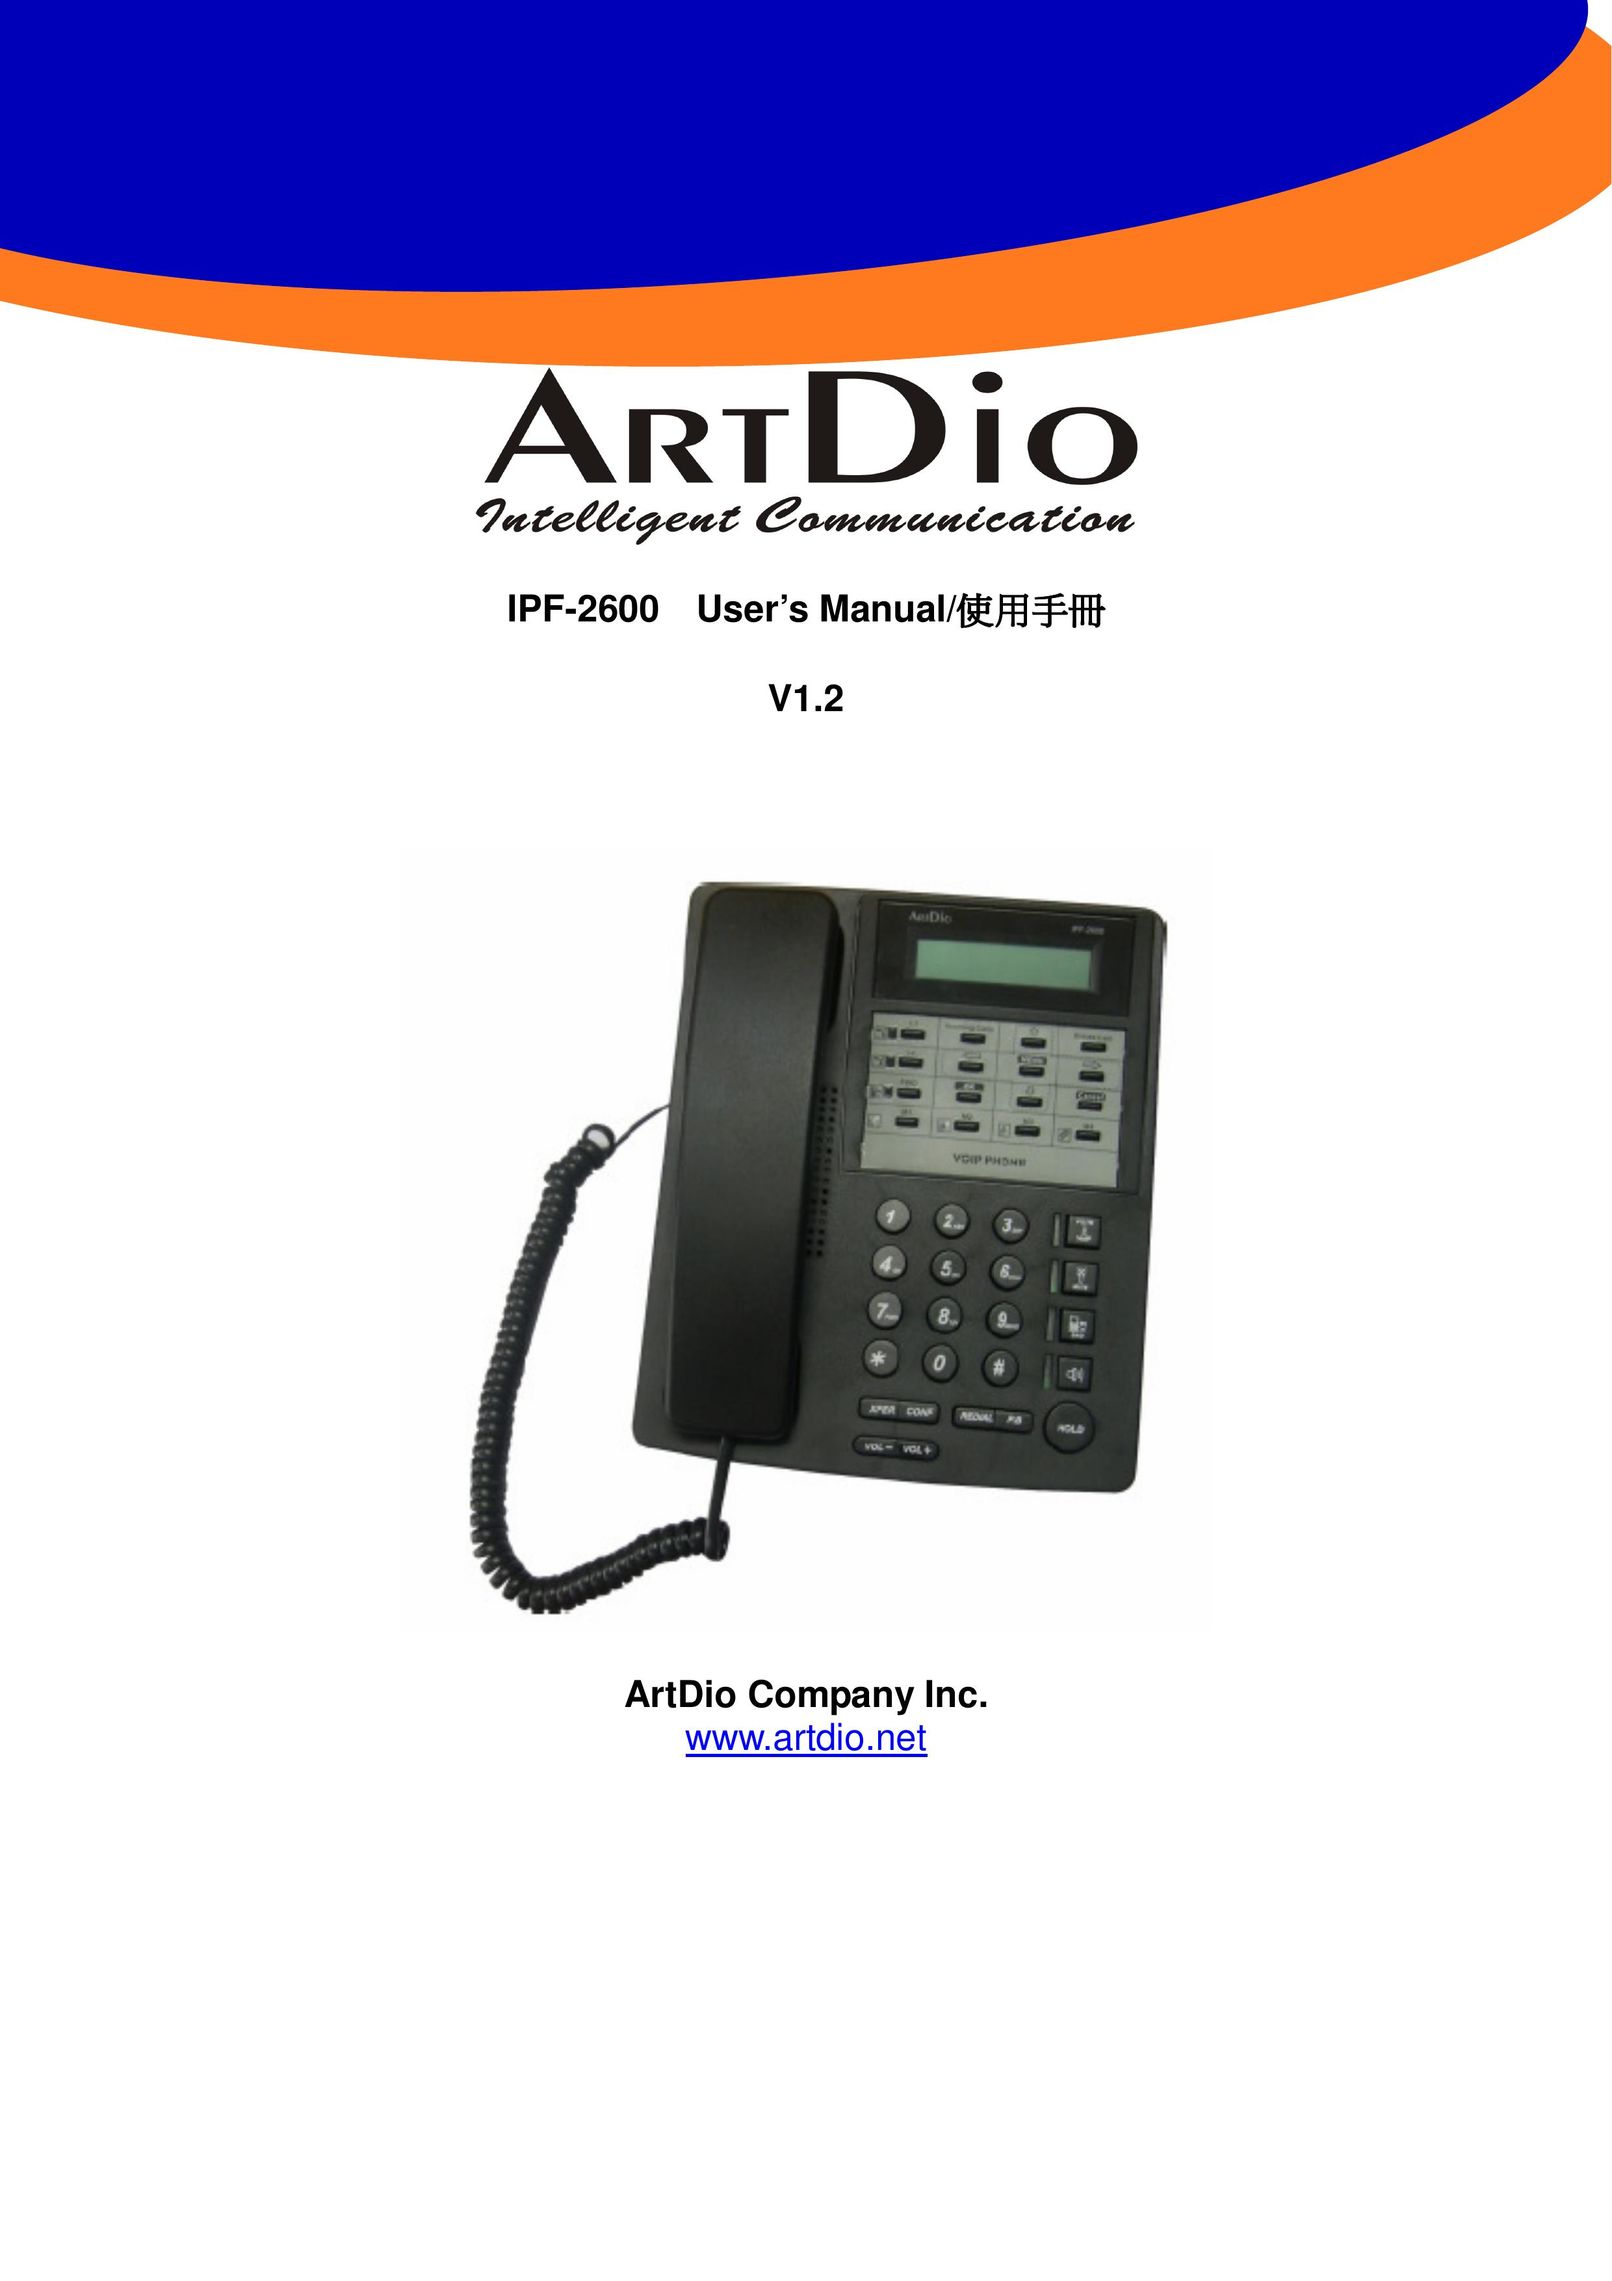 ArtDio IPF-2600 Telephone User Manual